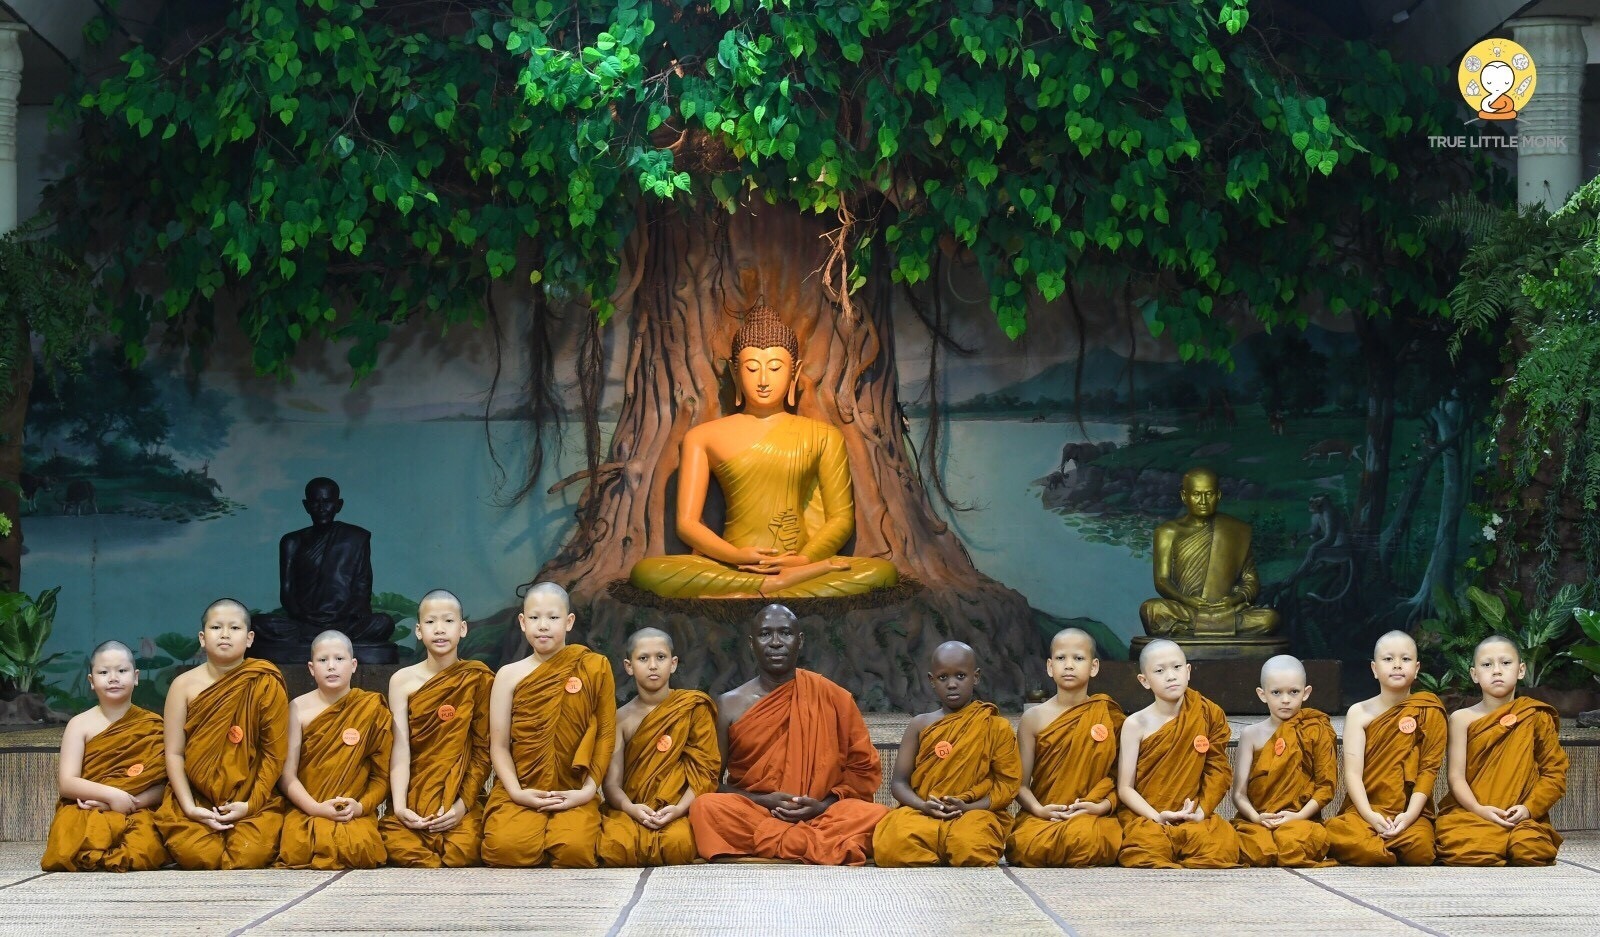 Bhante Buddharakkhita Attends the True Little Monks Programme in Thailand